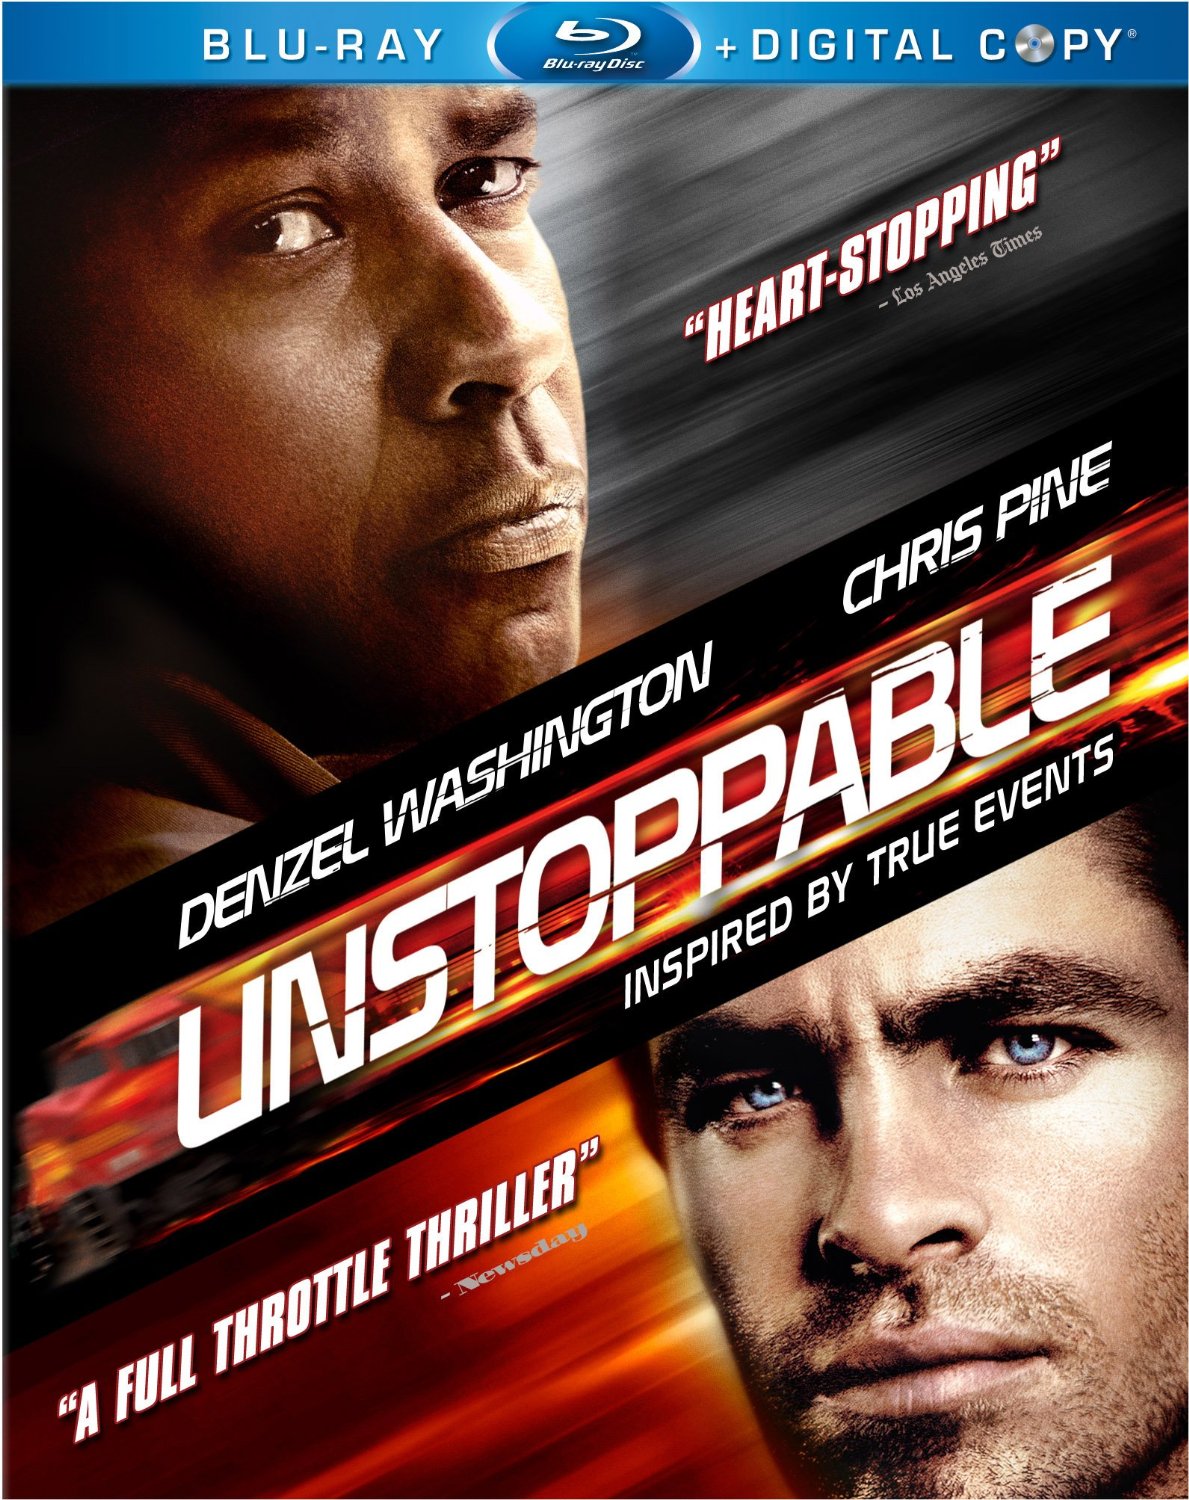 Unstoppable (2010) Denzel Washington - Movie Trailer, DVD, Blu-ray, Cast, Plot